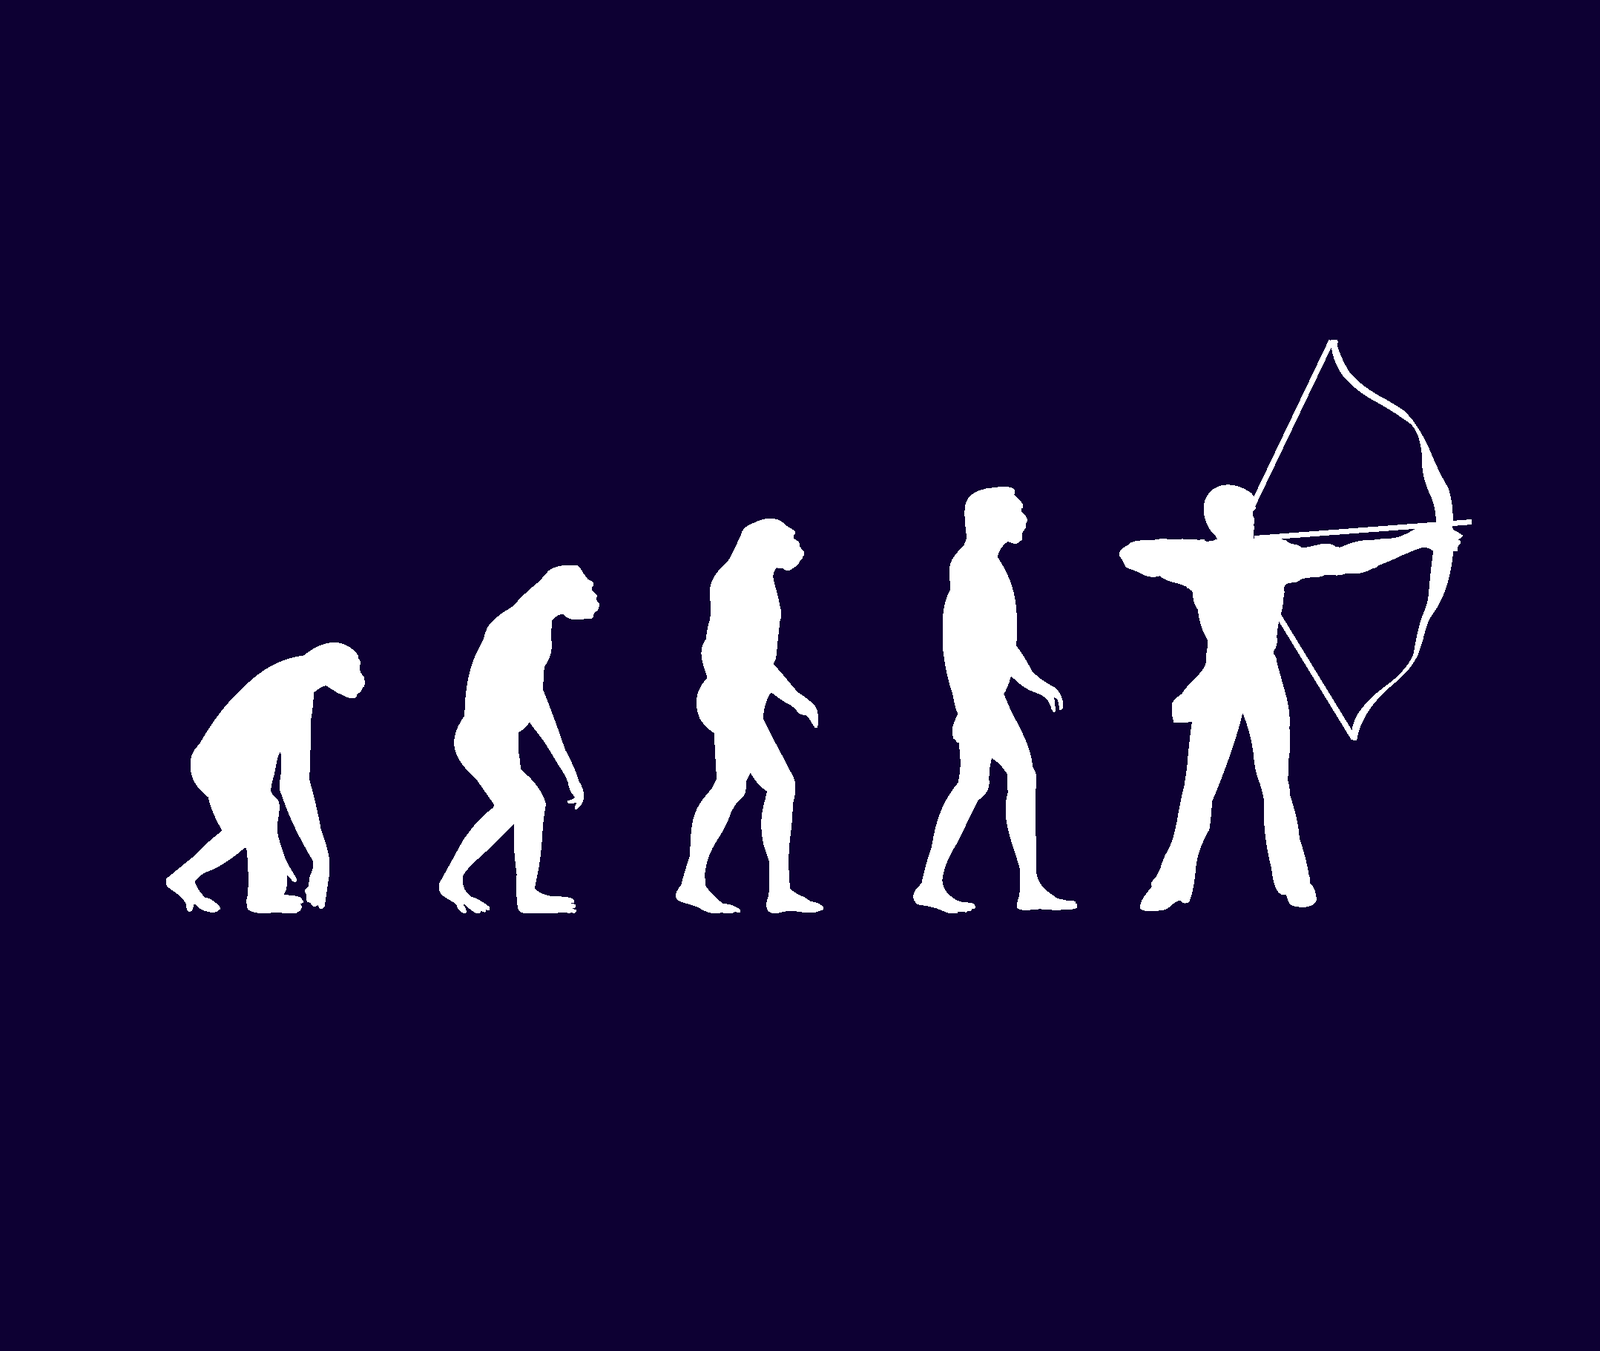 Эволюция человека. Эволюция человека от обезьяны. Эволюция картинки. Эволюция человека картинки. Эволюция видна